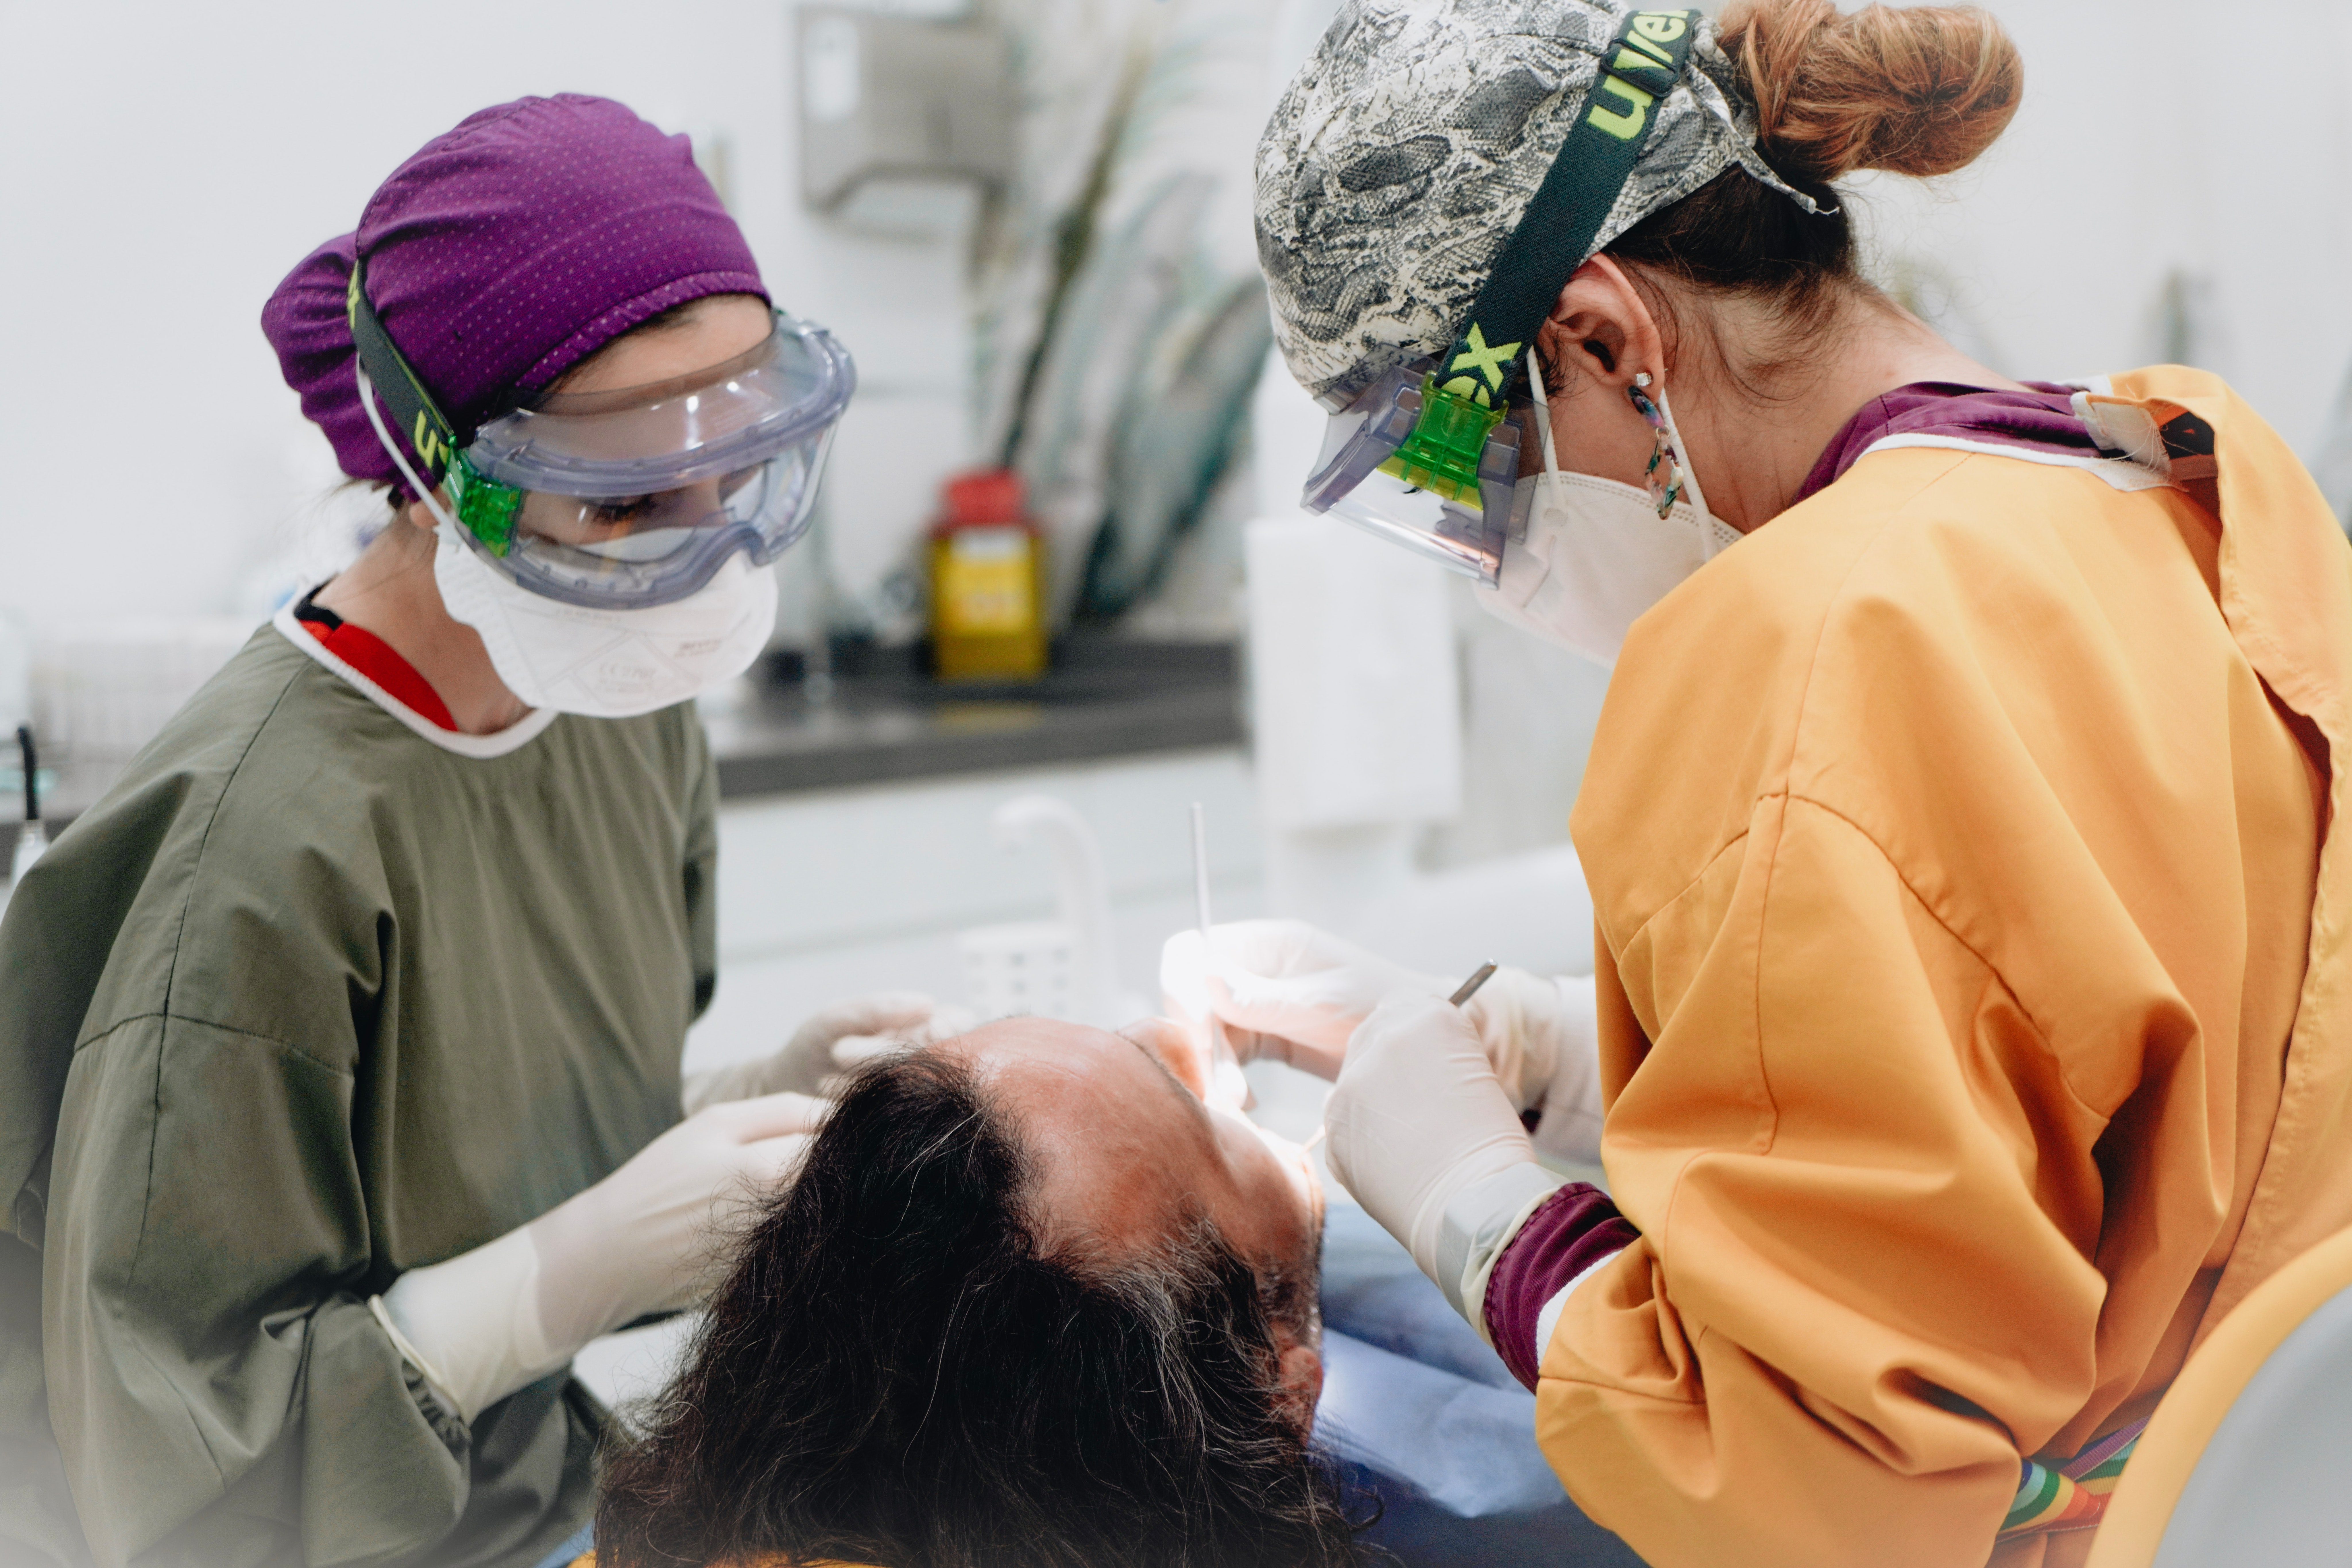 El Cajon, California Advancing Smiles through Dental Surgery and Comprehensive Care